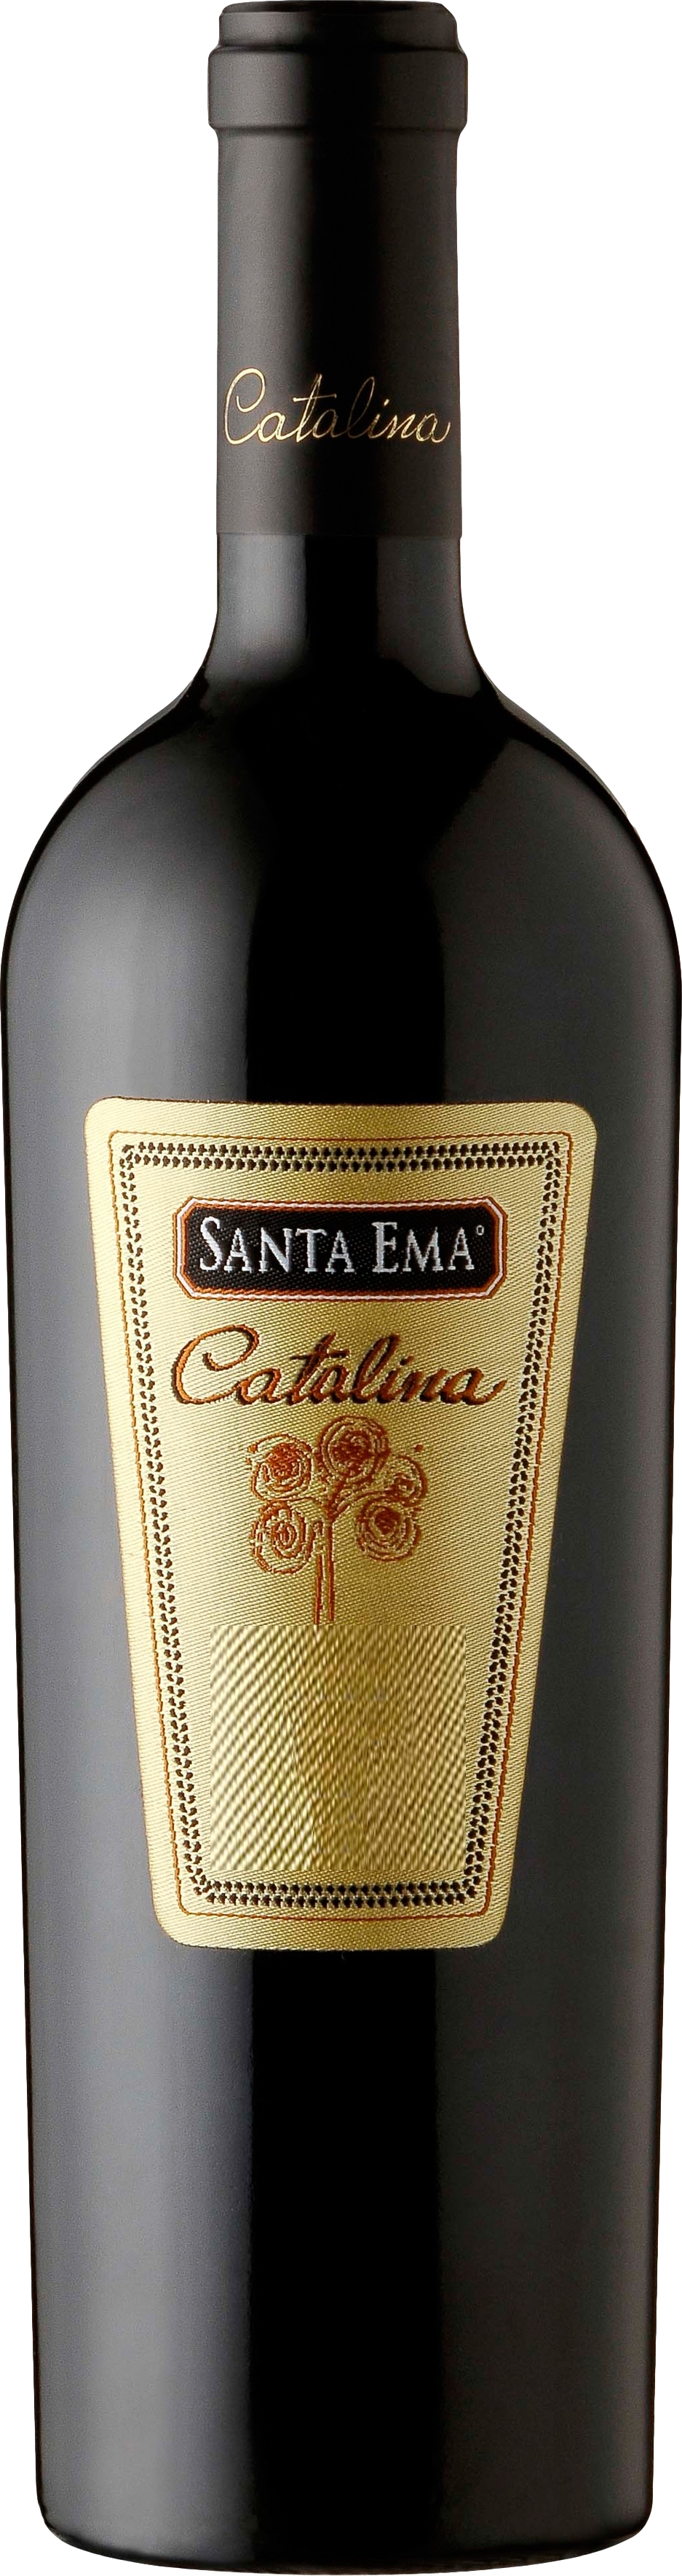 Santa Ema Catalina 2017